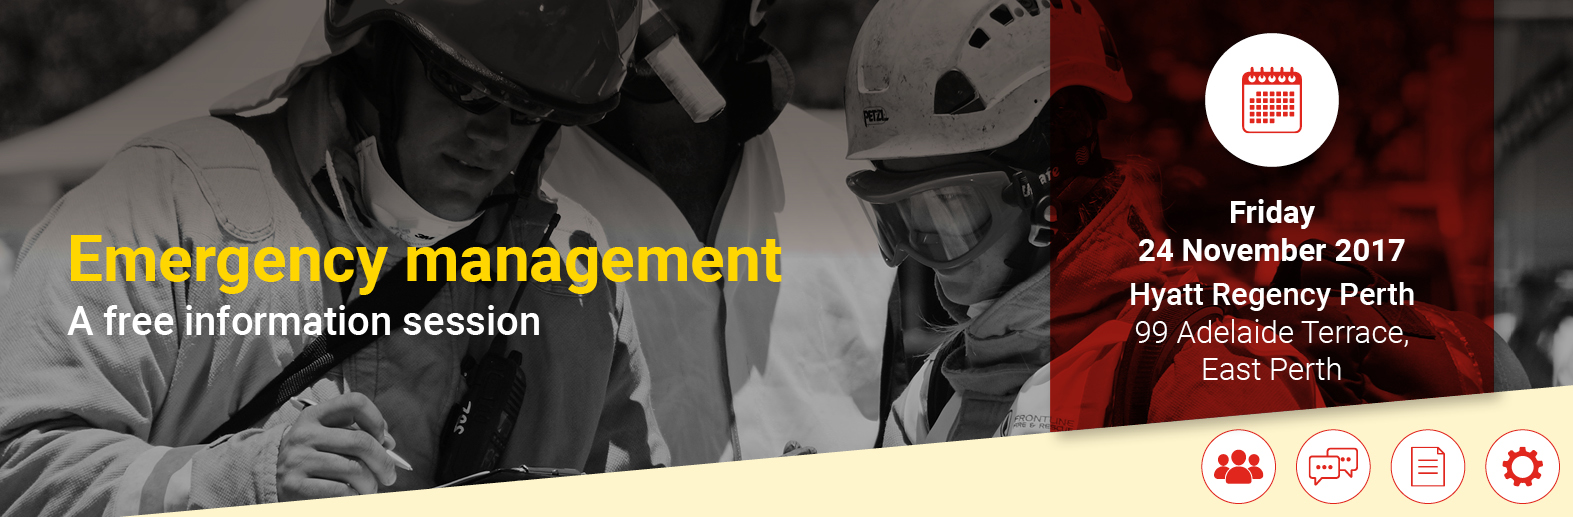 Emergency management – information session